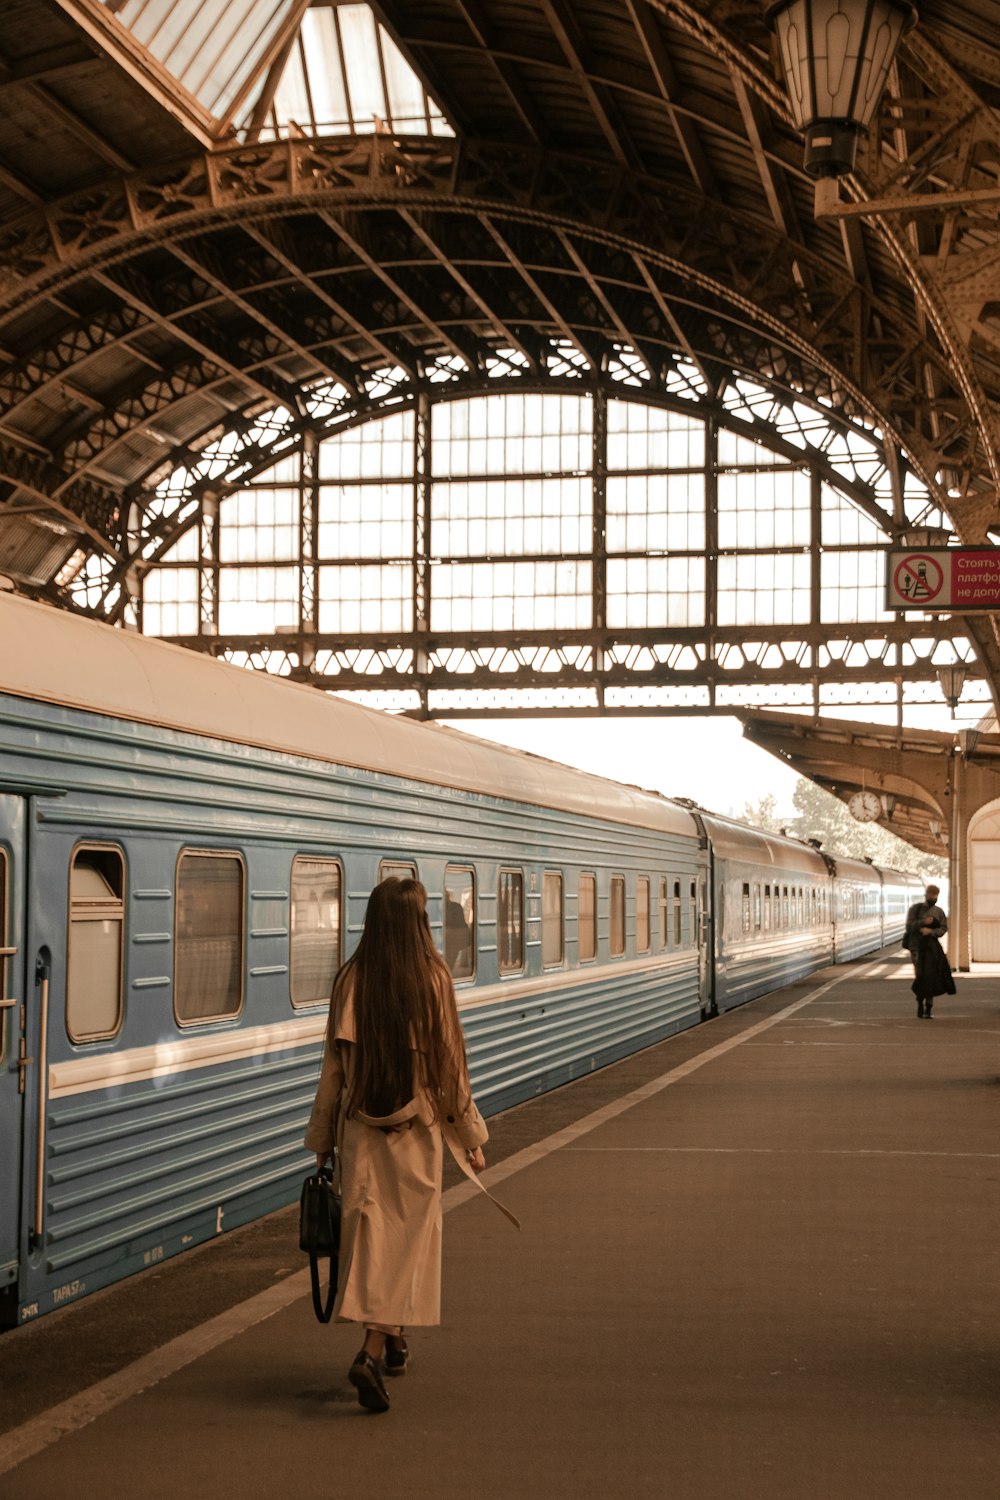 a woman walking on a platform next to a train